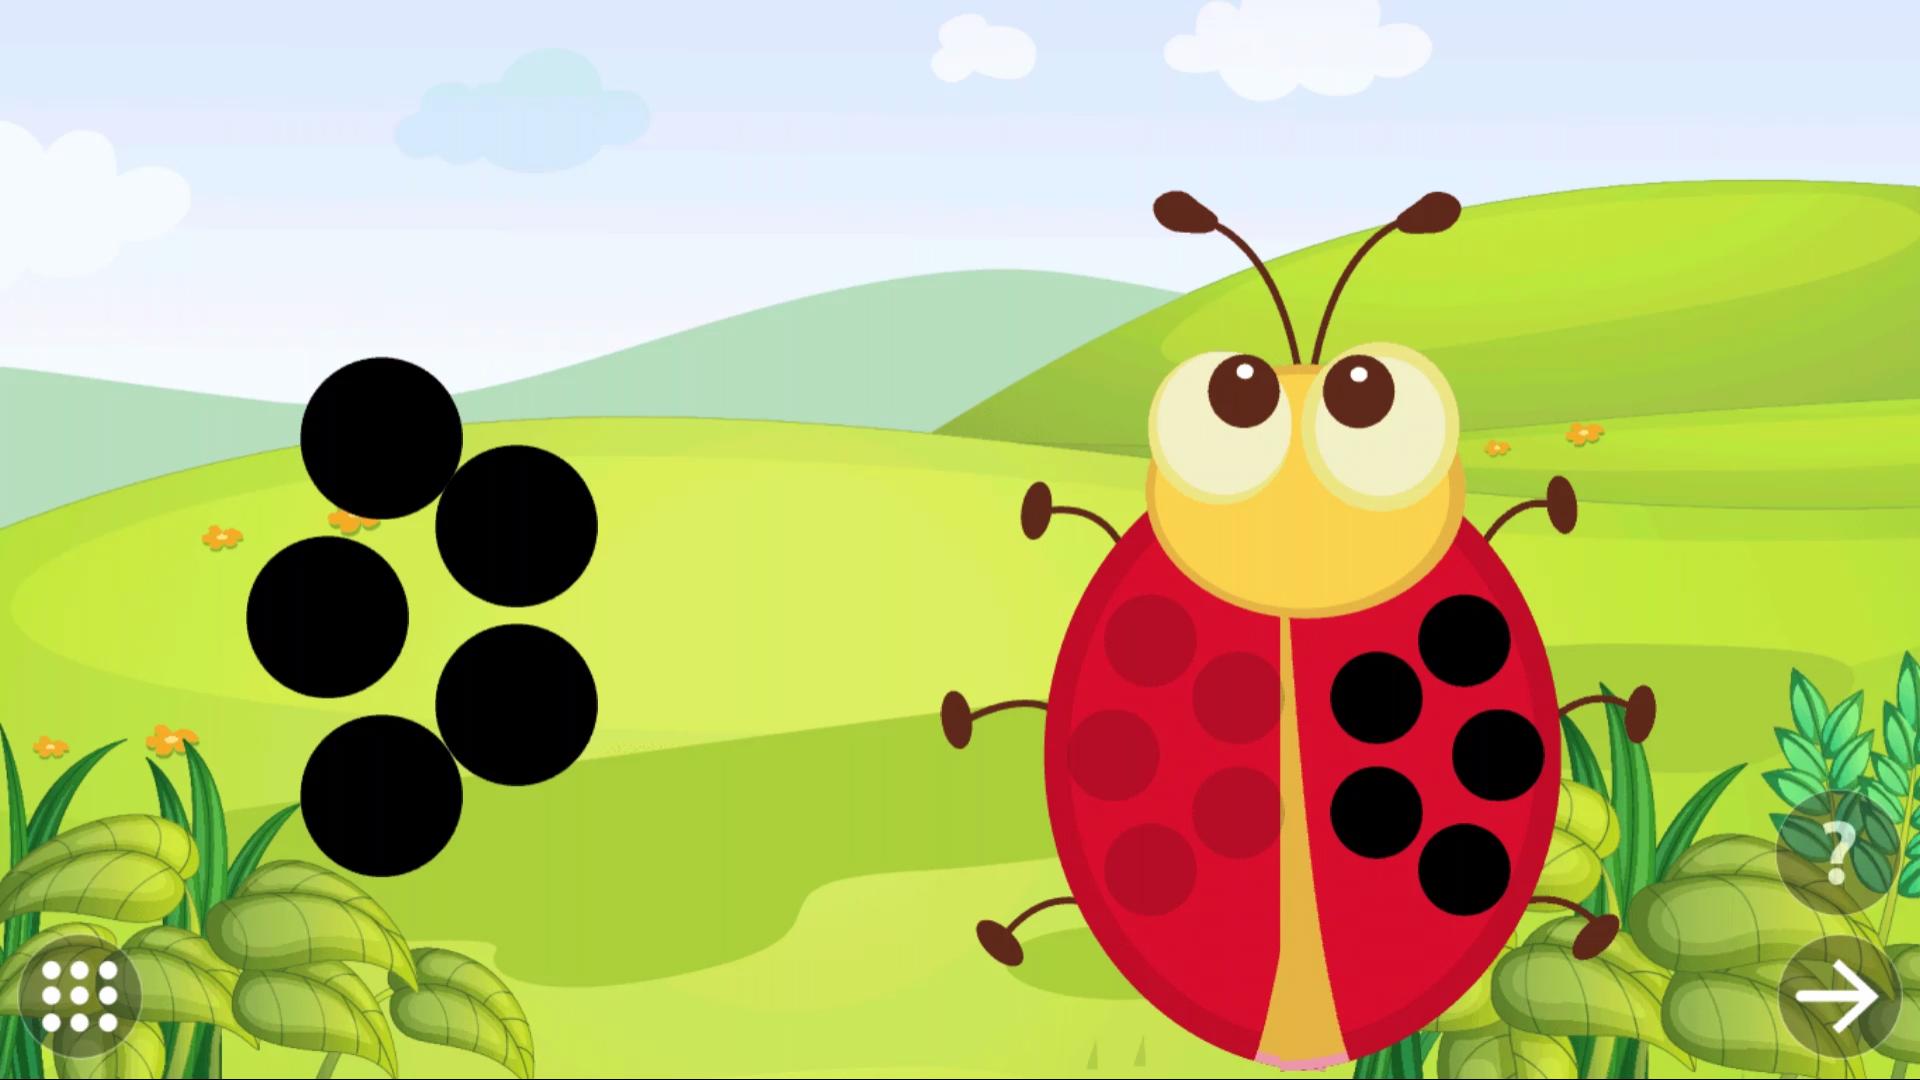 Kids Fun Learning - Educational Cool Math Games 1.0.2.0 Screenshot 8